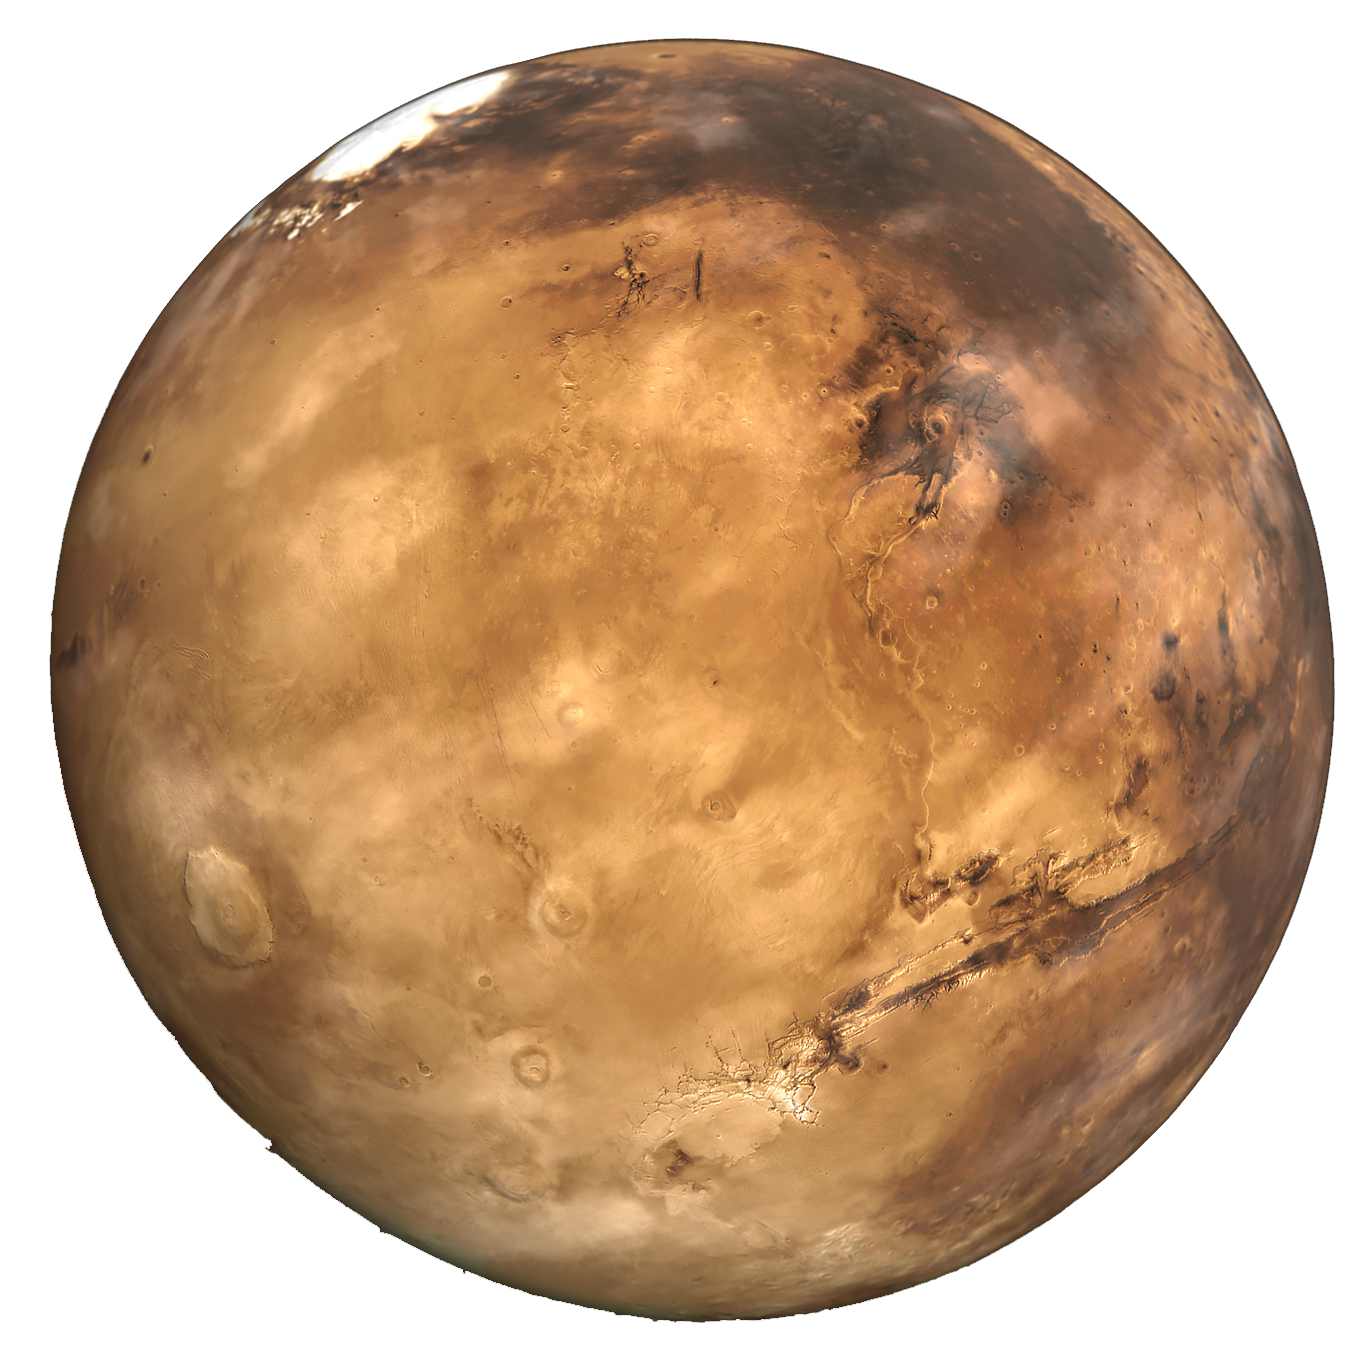 File:Mars (16716283421) - Transparent  - Wikimedia Commons